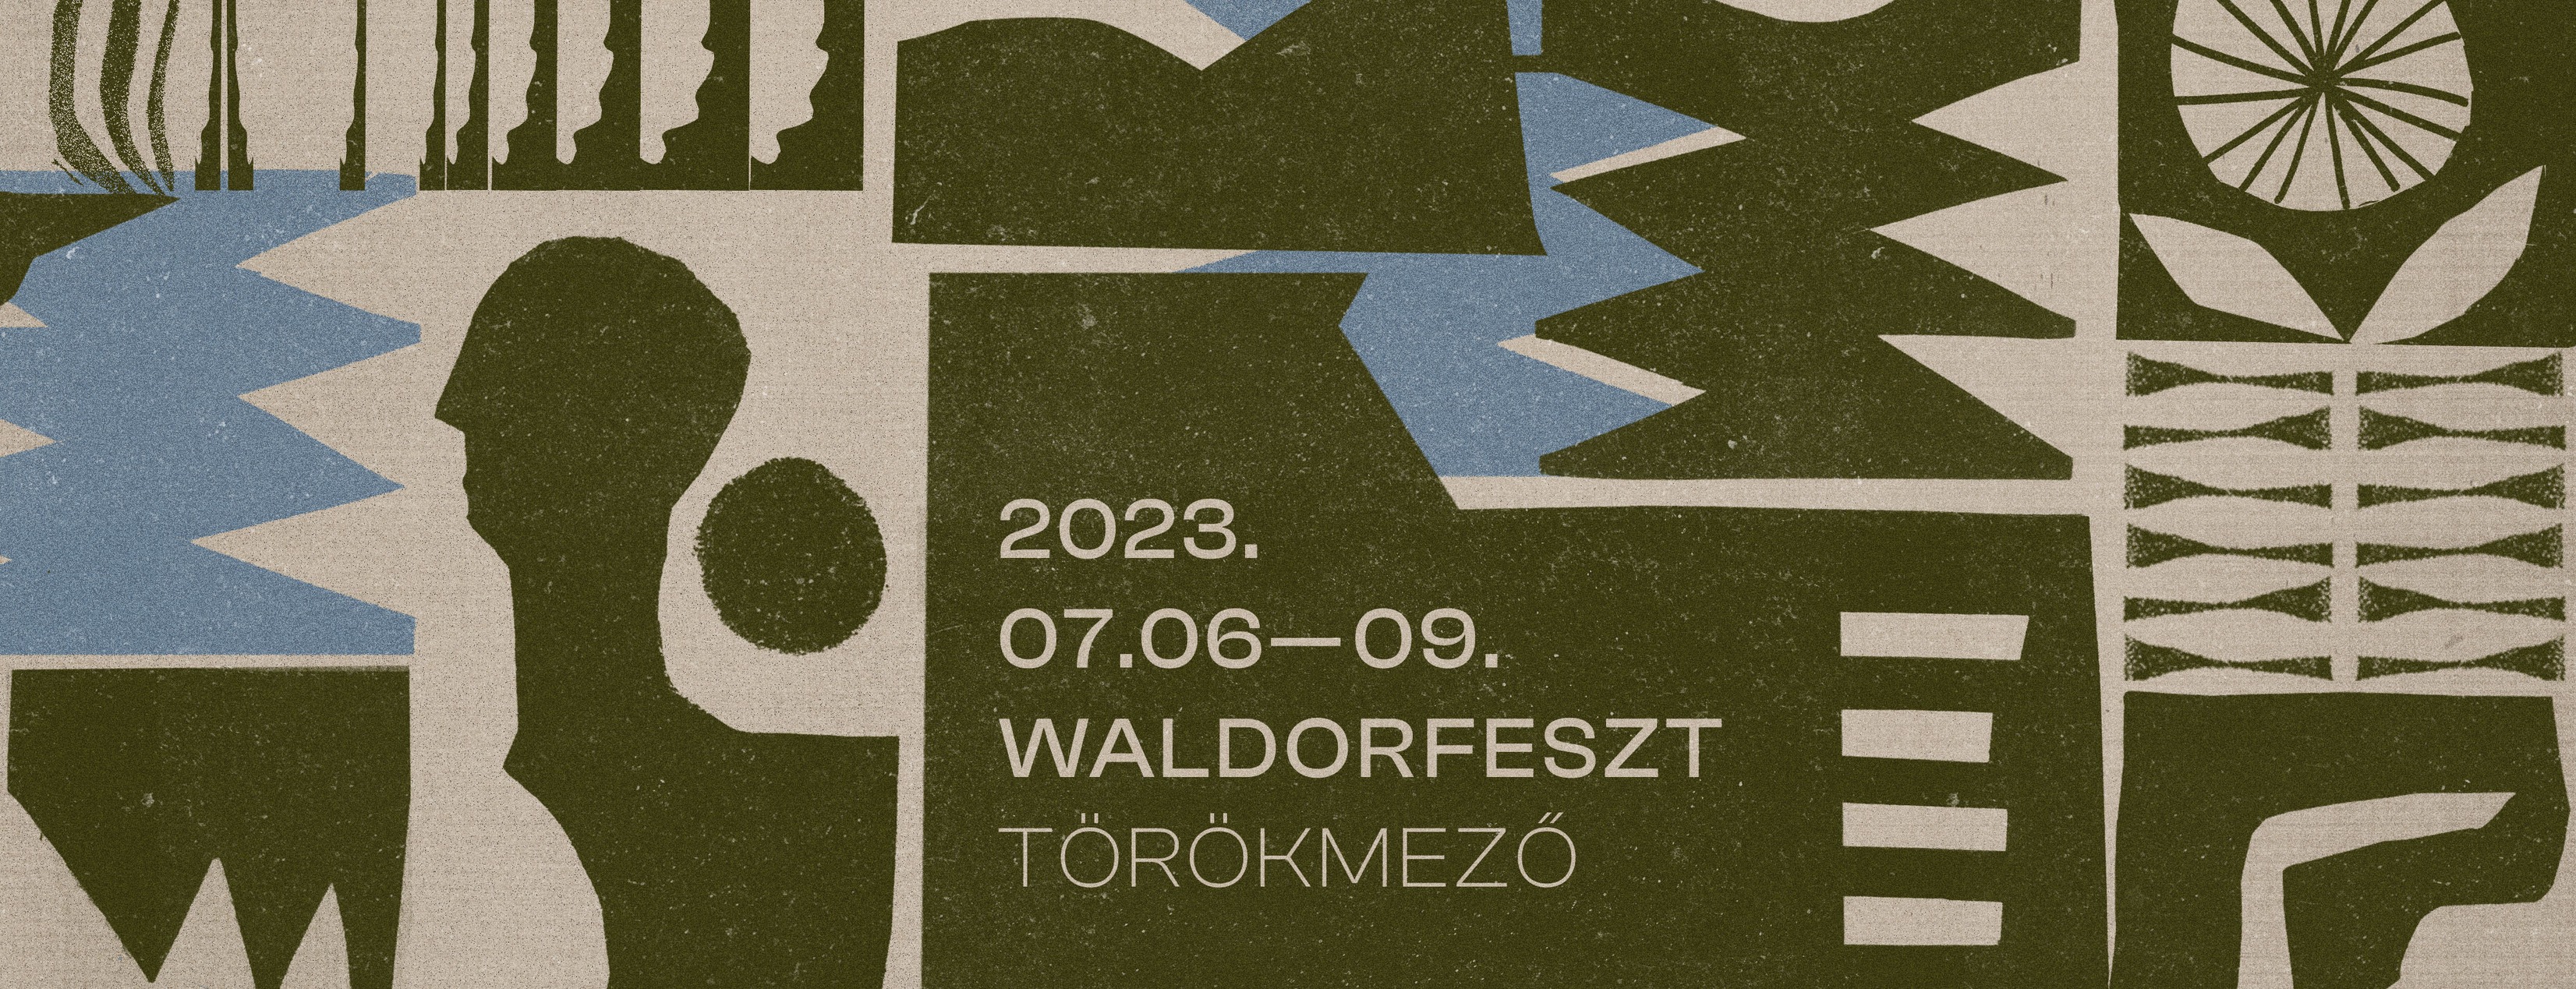 ‘Waldofest’ @ Törökmező & Nagymaros in Hungary, 6 - 9 July